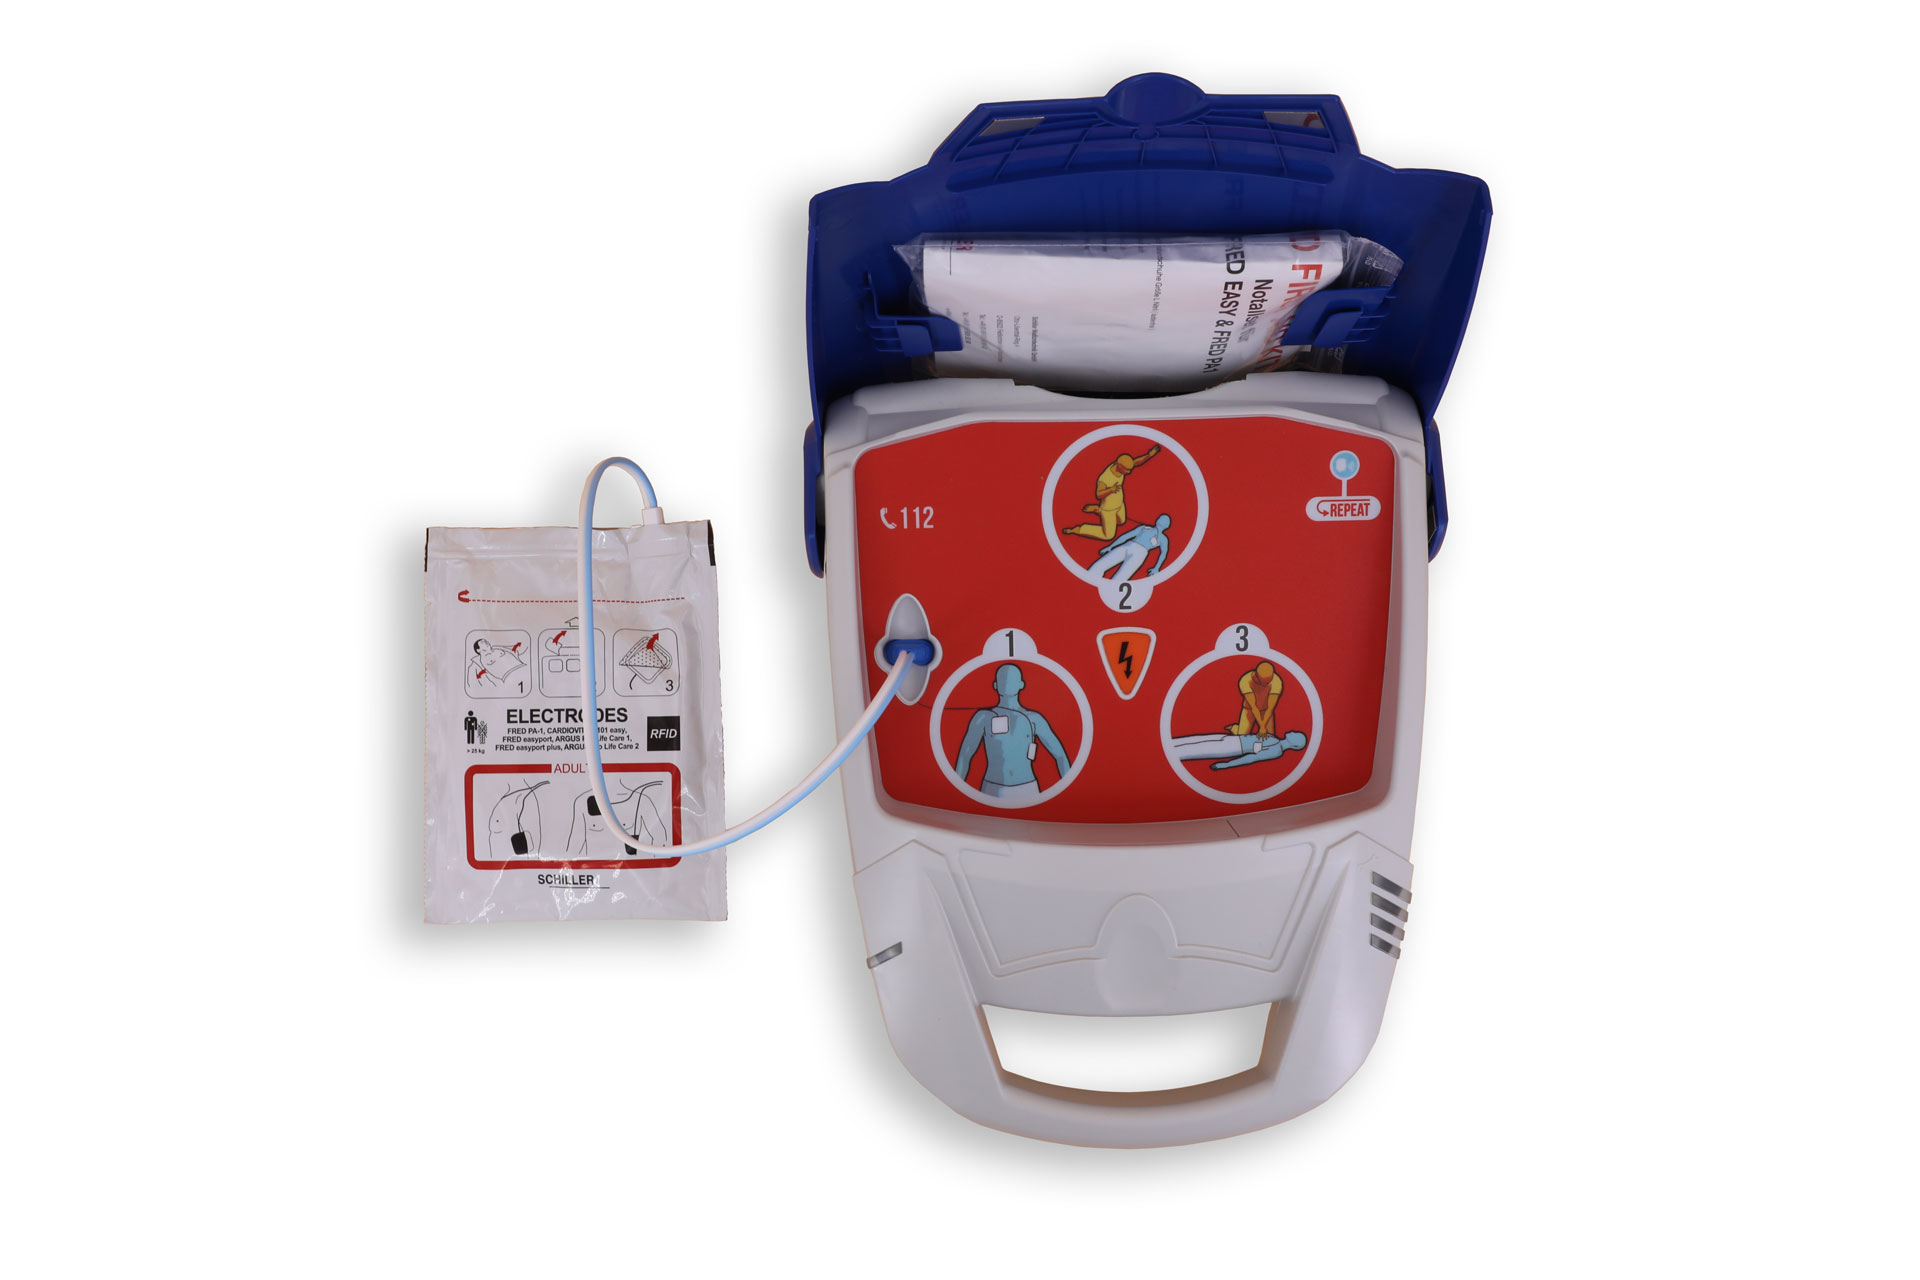 Notfallretter.de® Basic AED - geöffnet